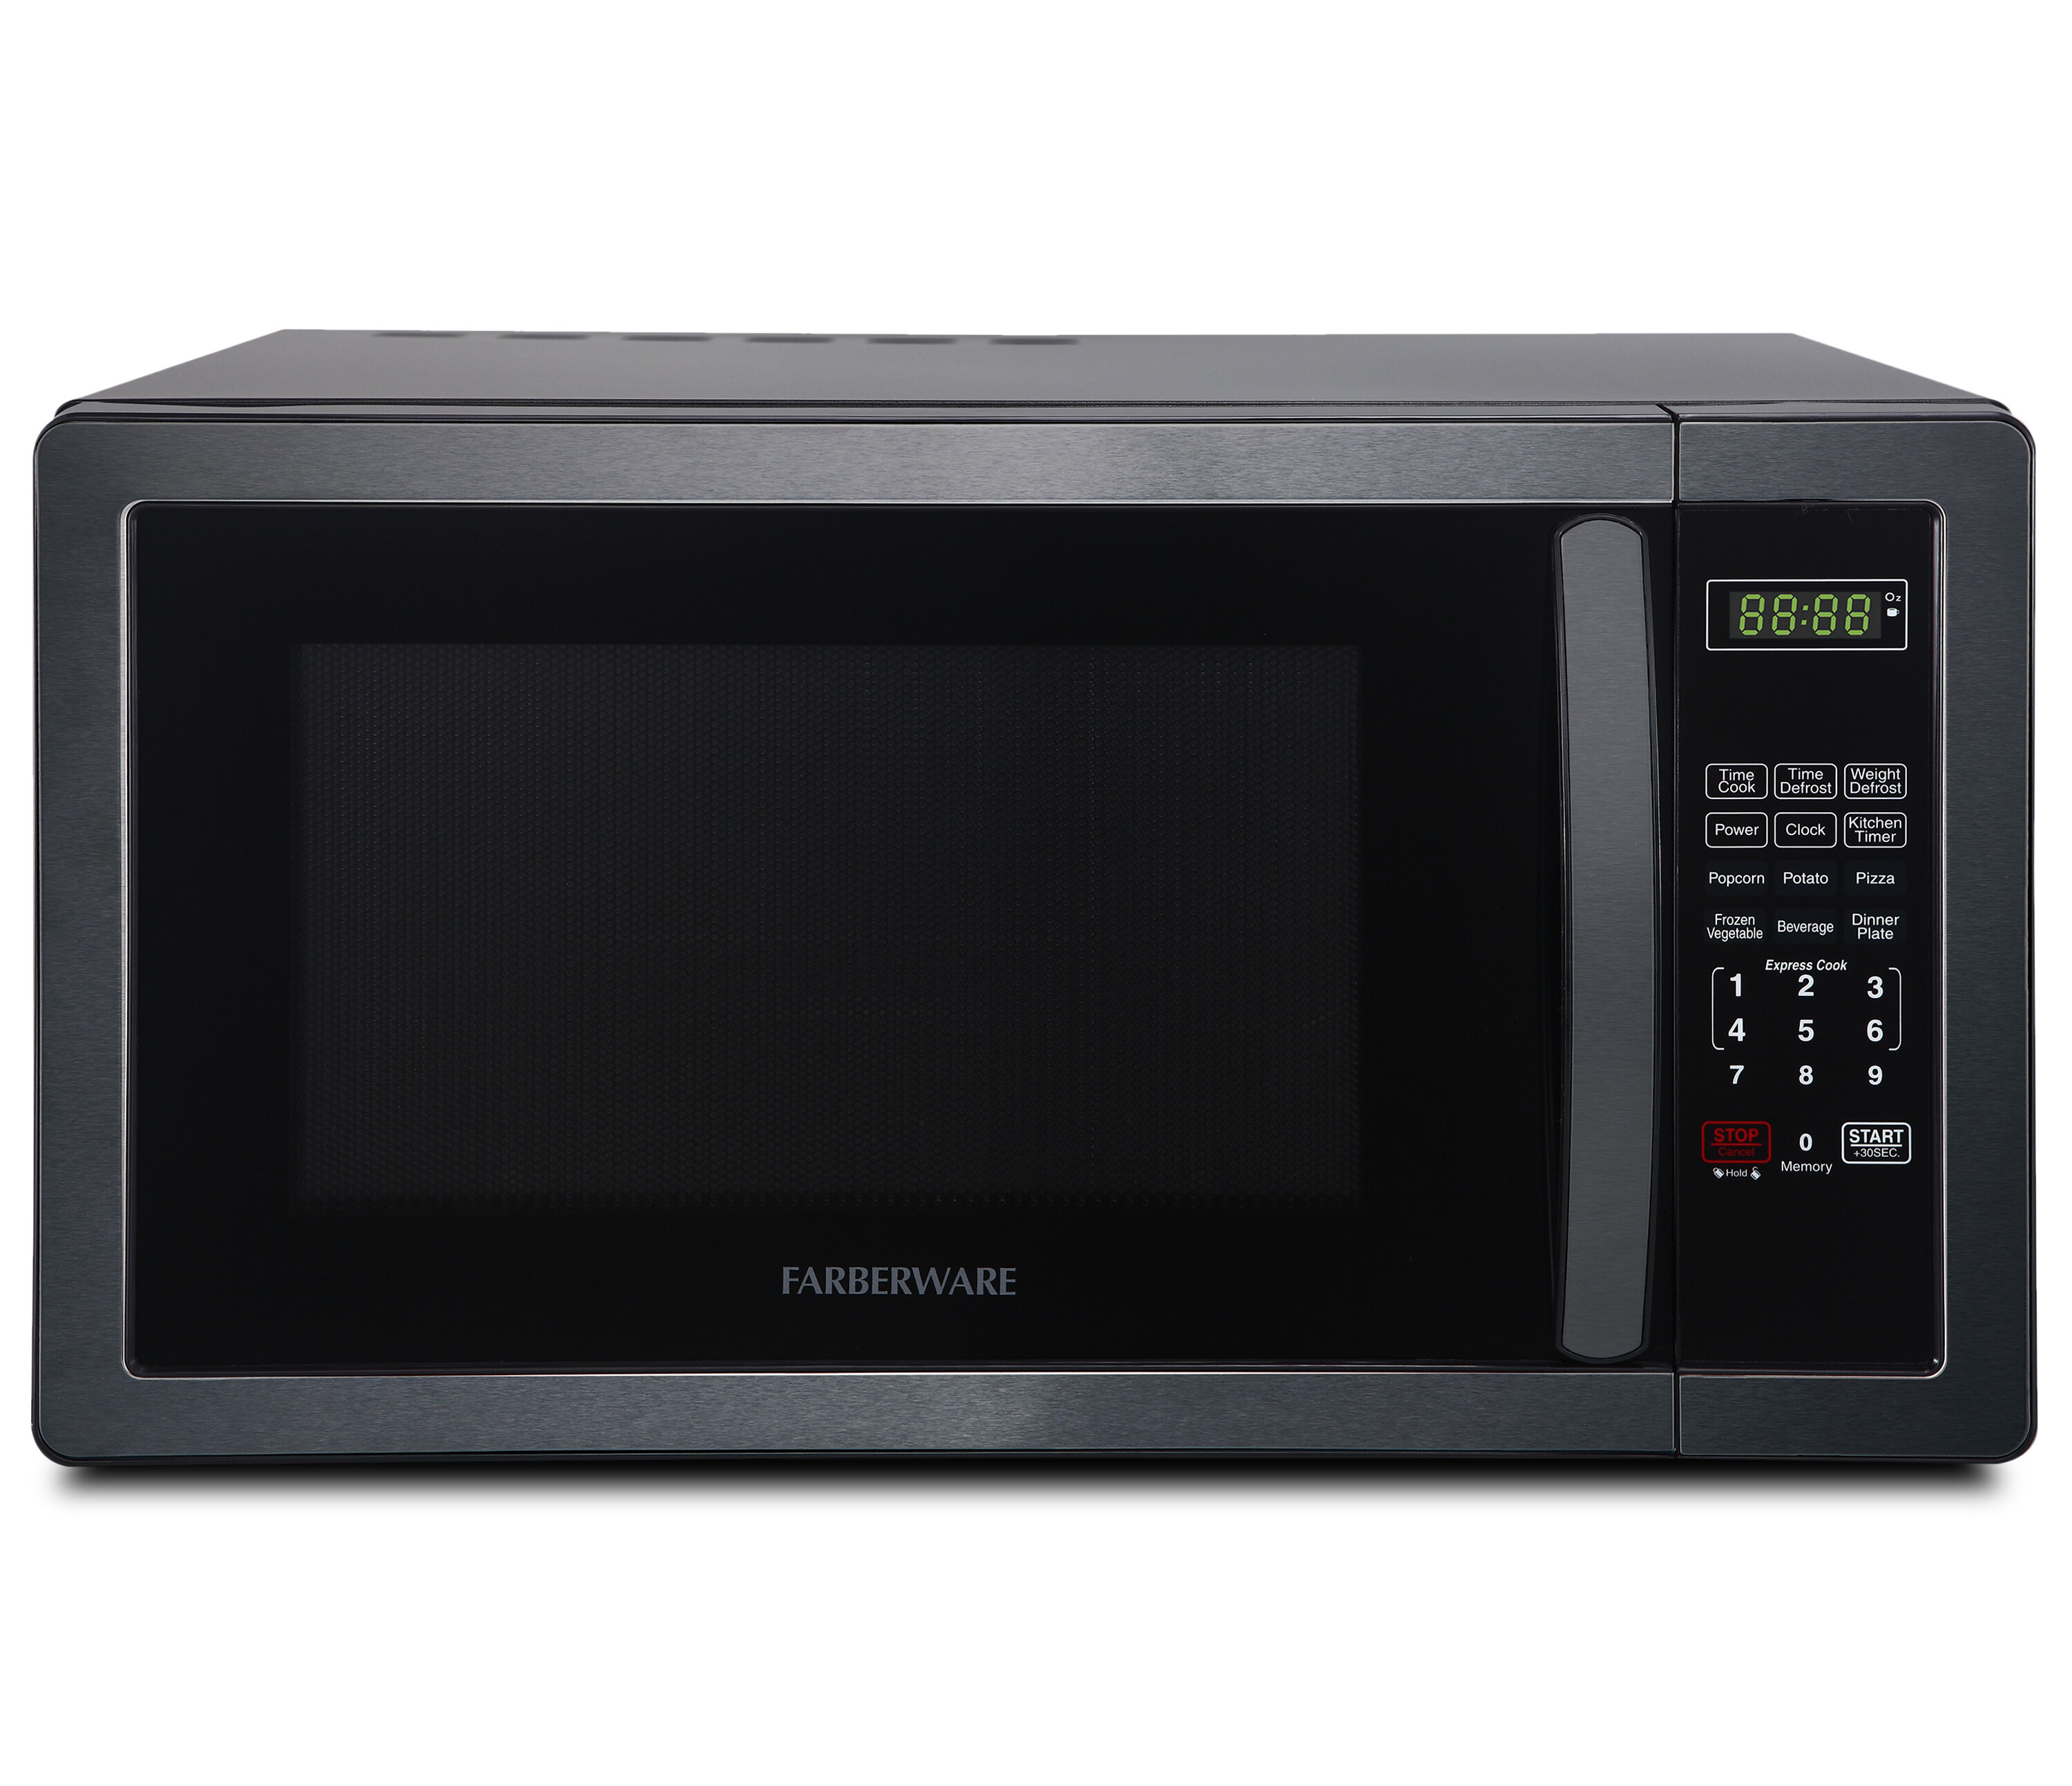 Hamilton Beach 1.6 Cu. ft. Sensor Cook Countertop Microwave Oven, 1100 Watts, Stainless Steel